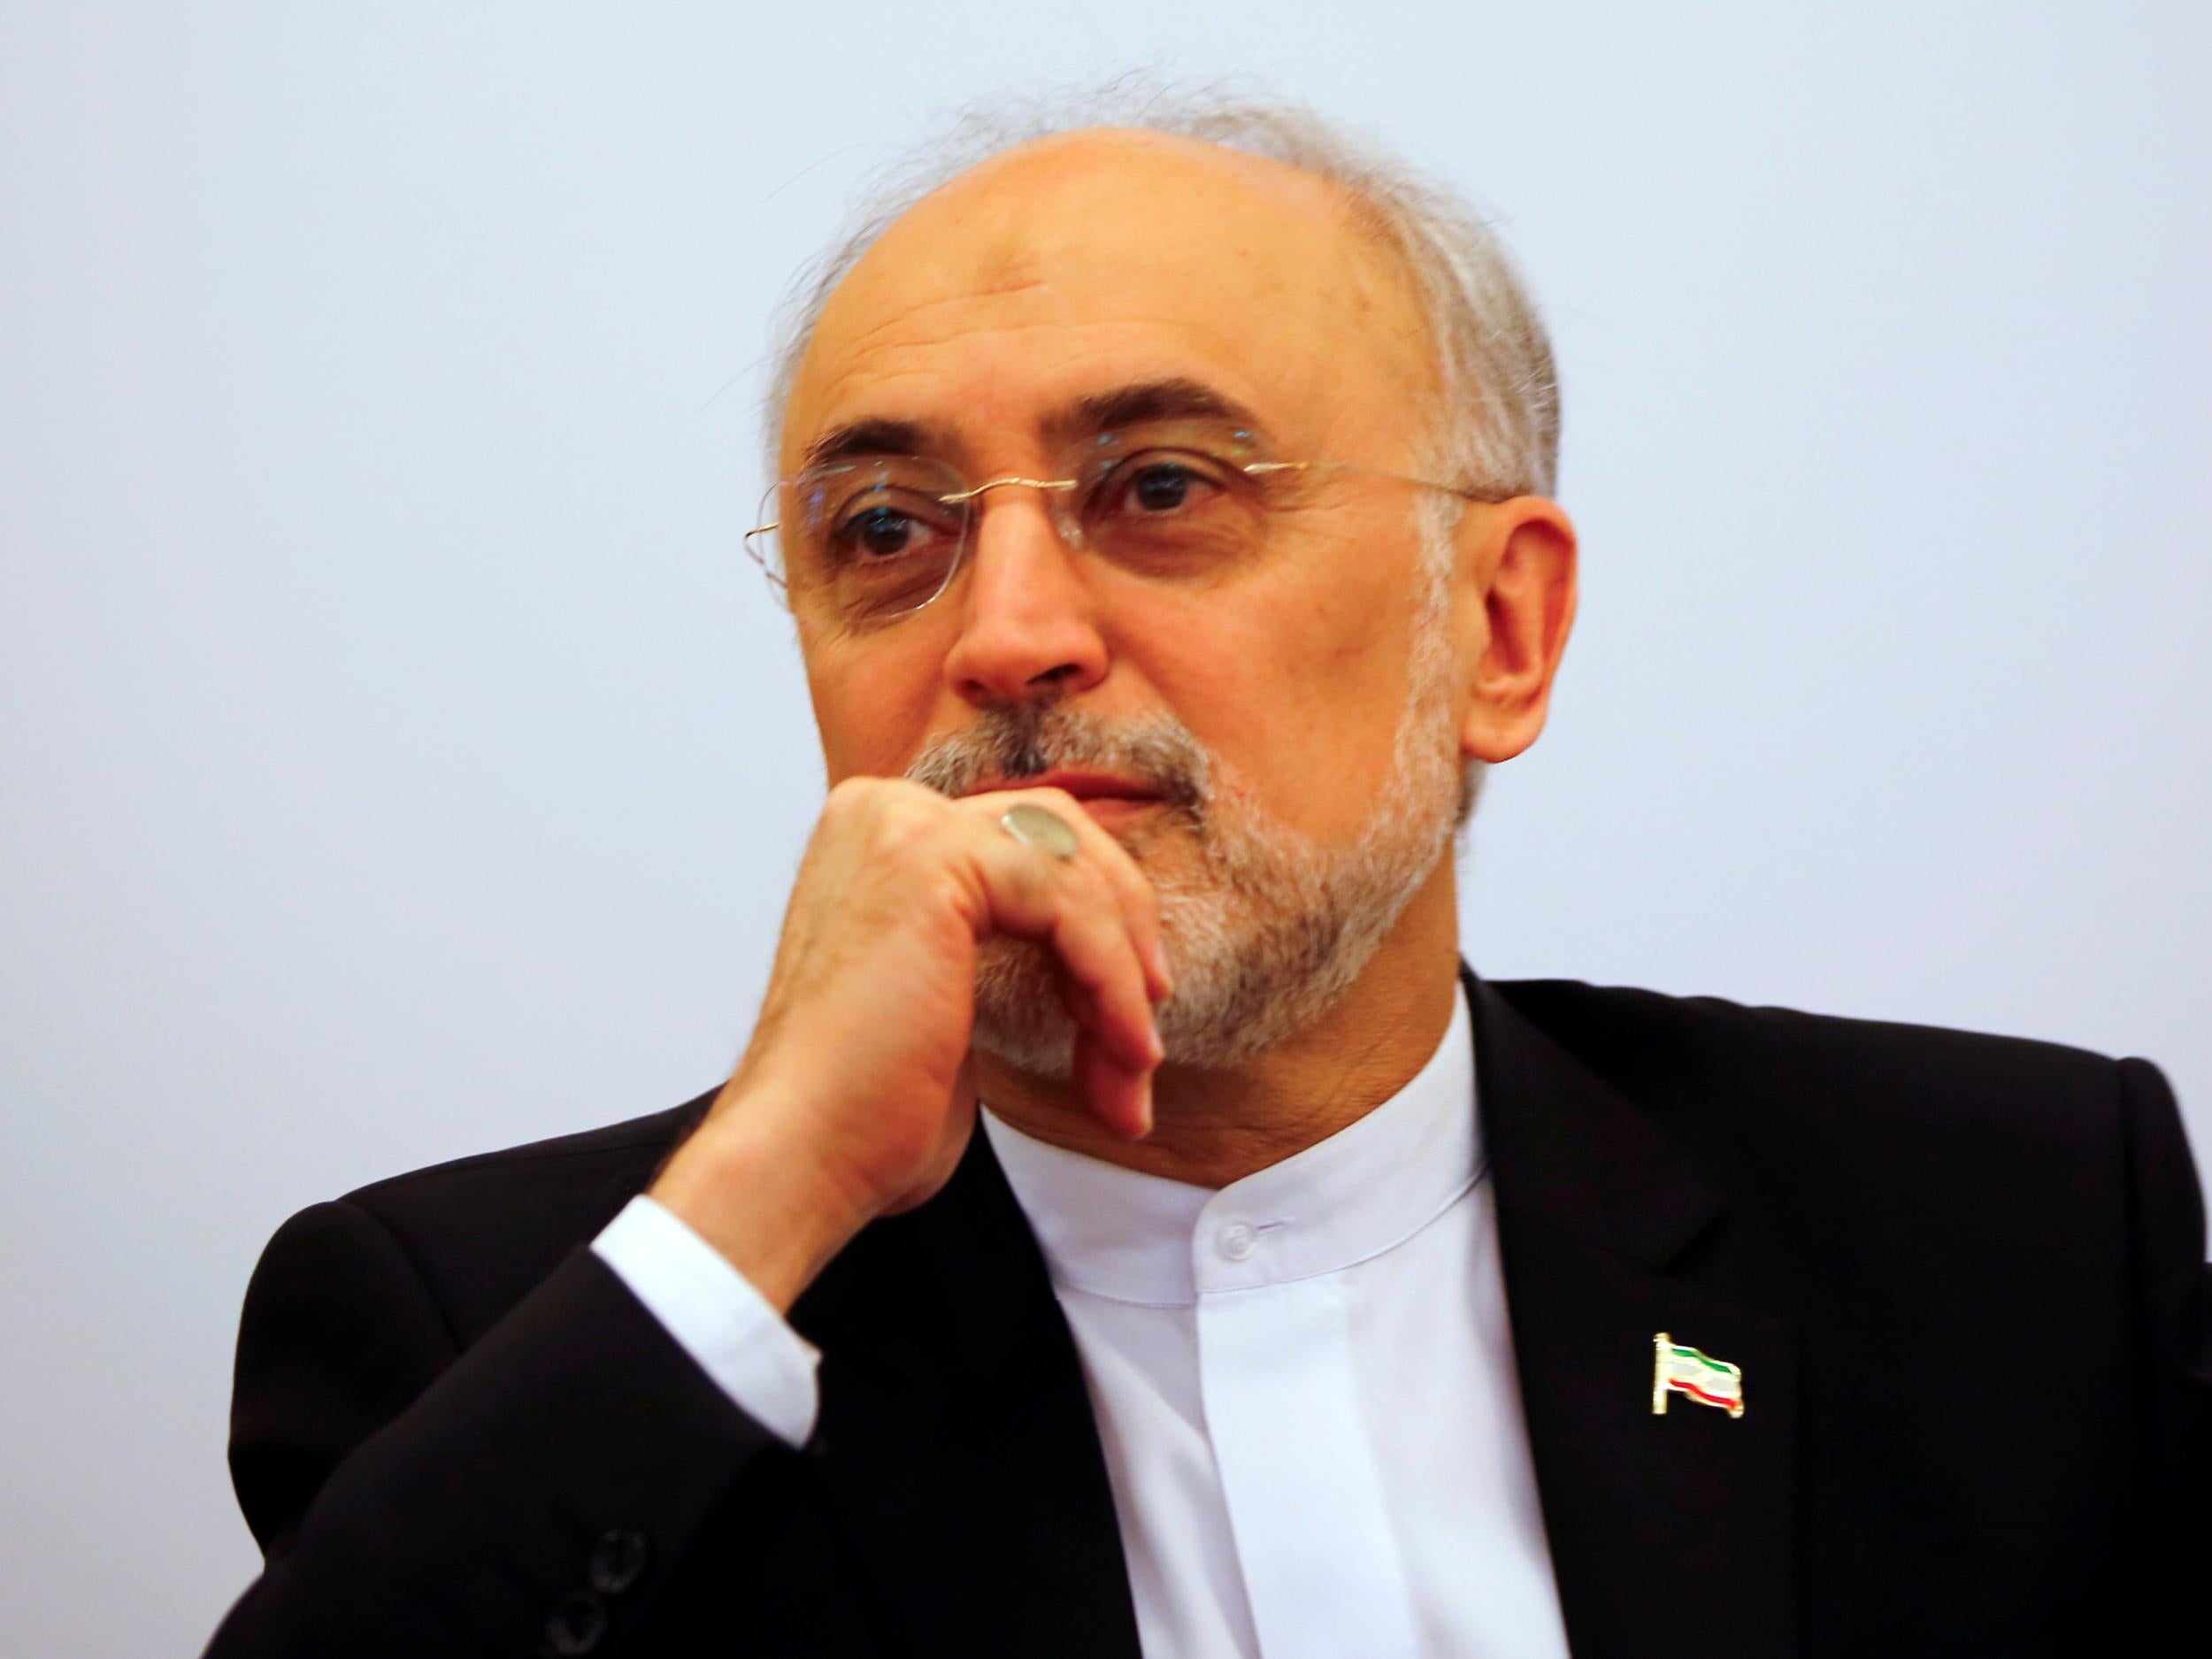 Ali Akbar Salehi, head of the Iranian Atomic Energy Organisation